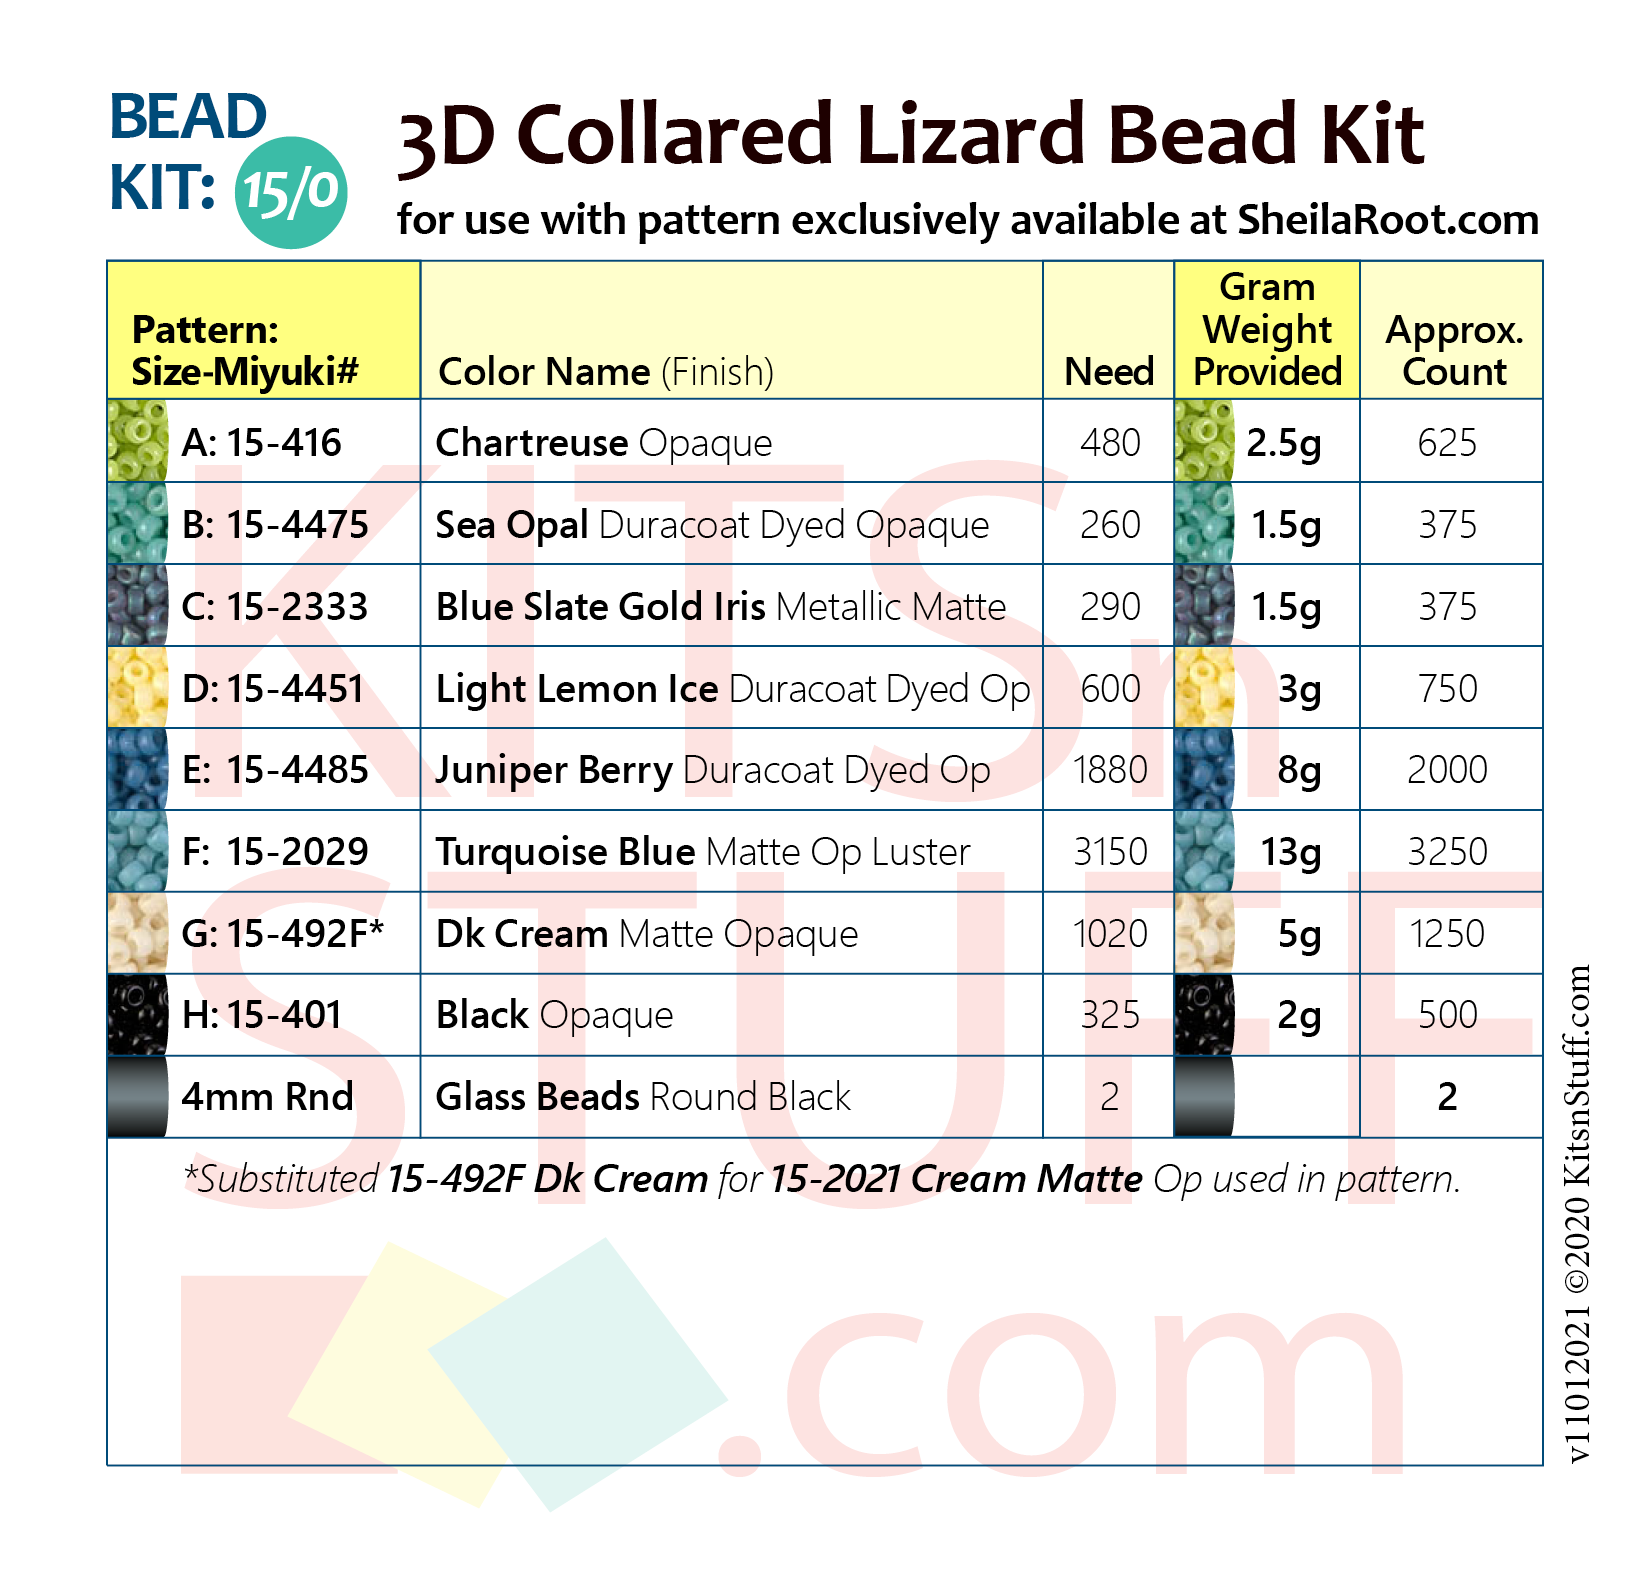 Blue Collared Lizard 15/0 Bead Kit –